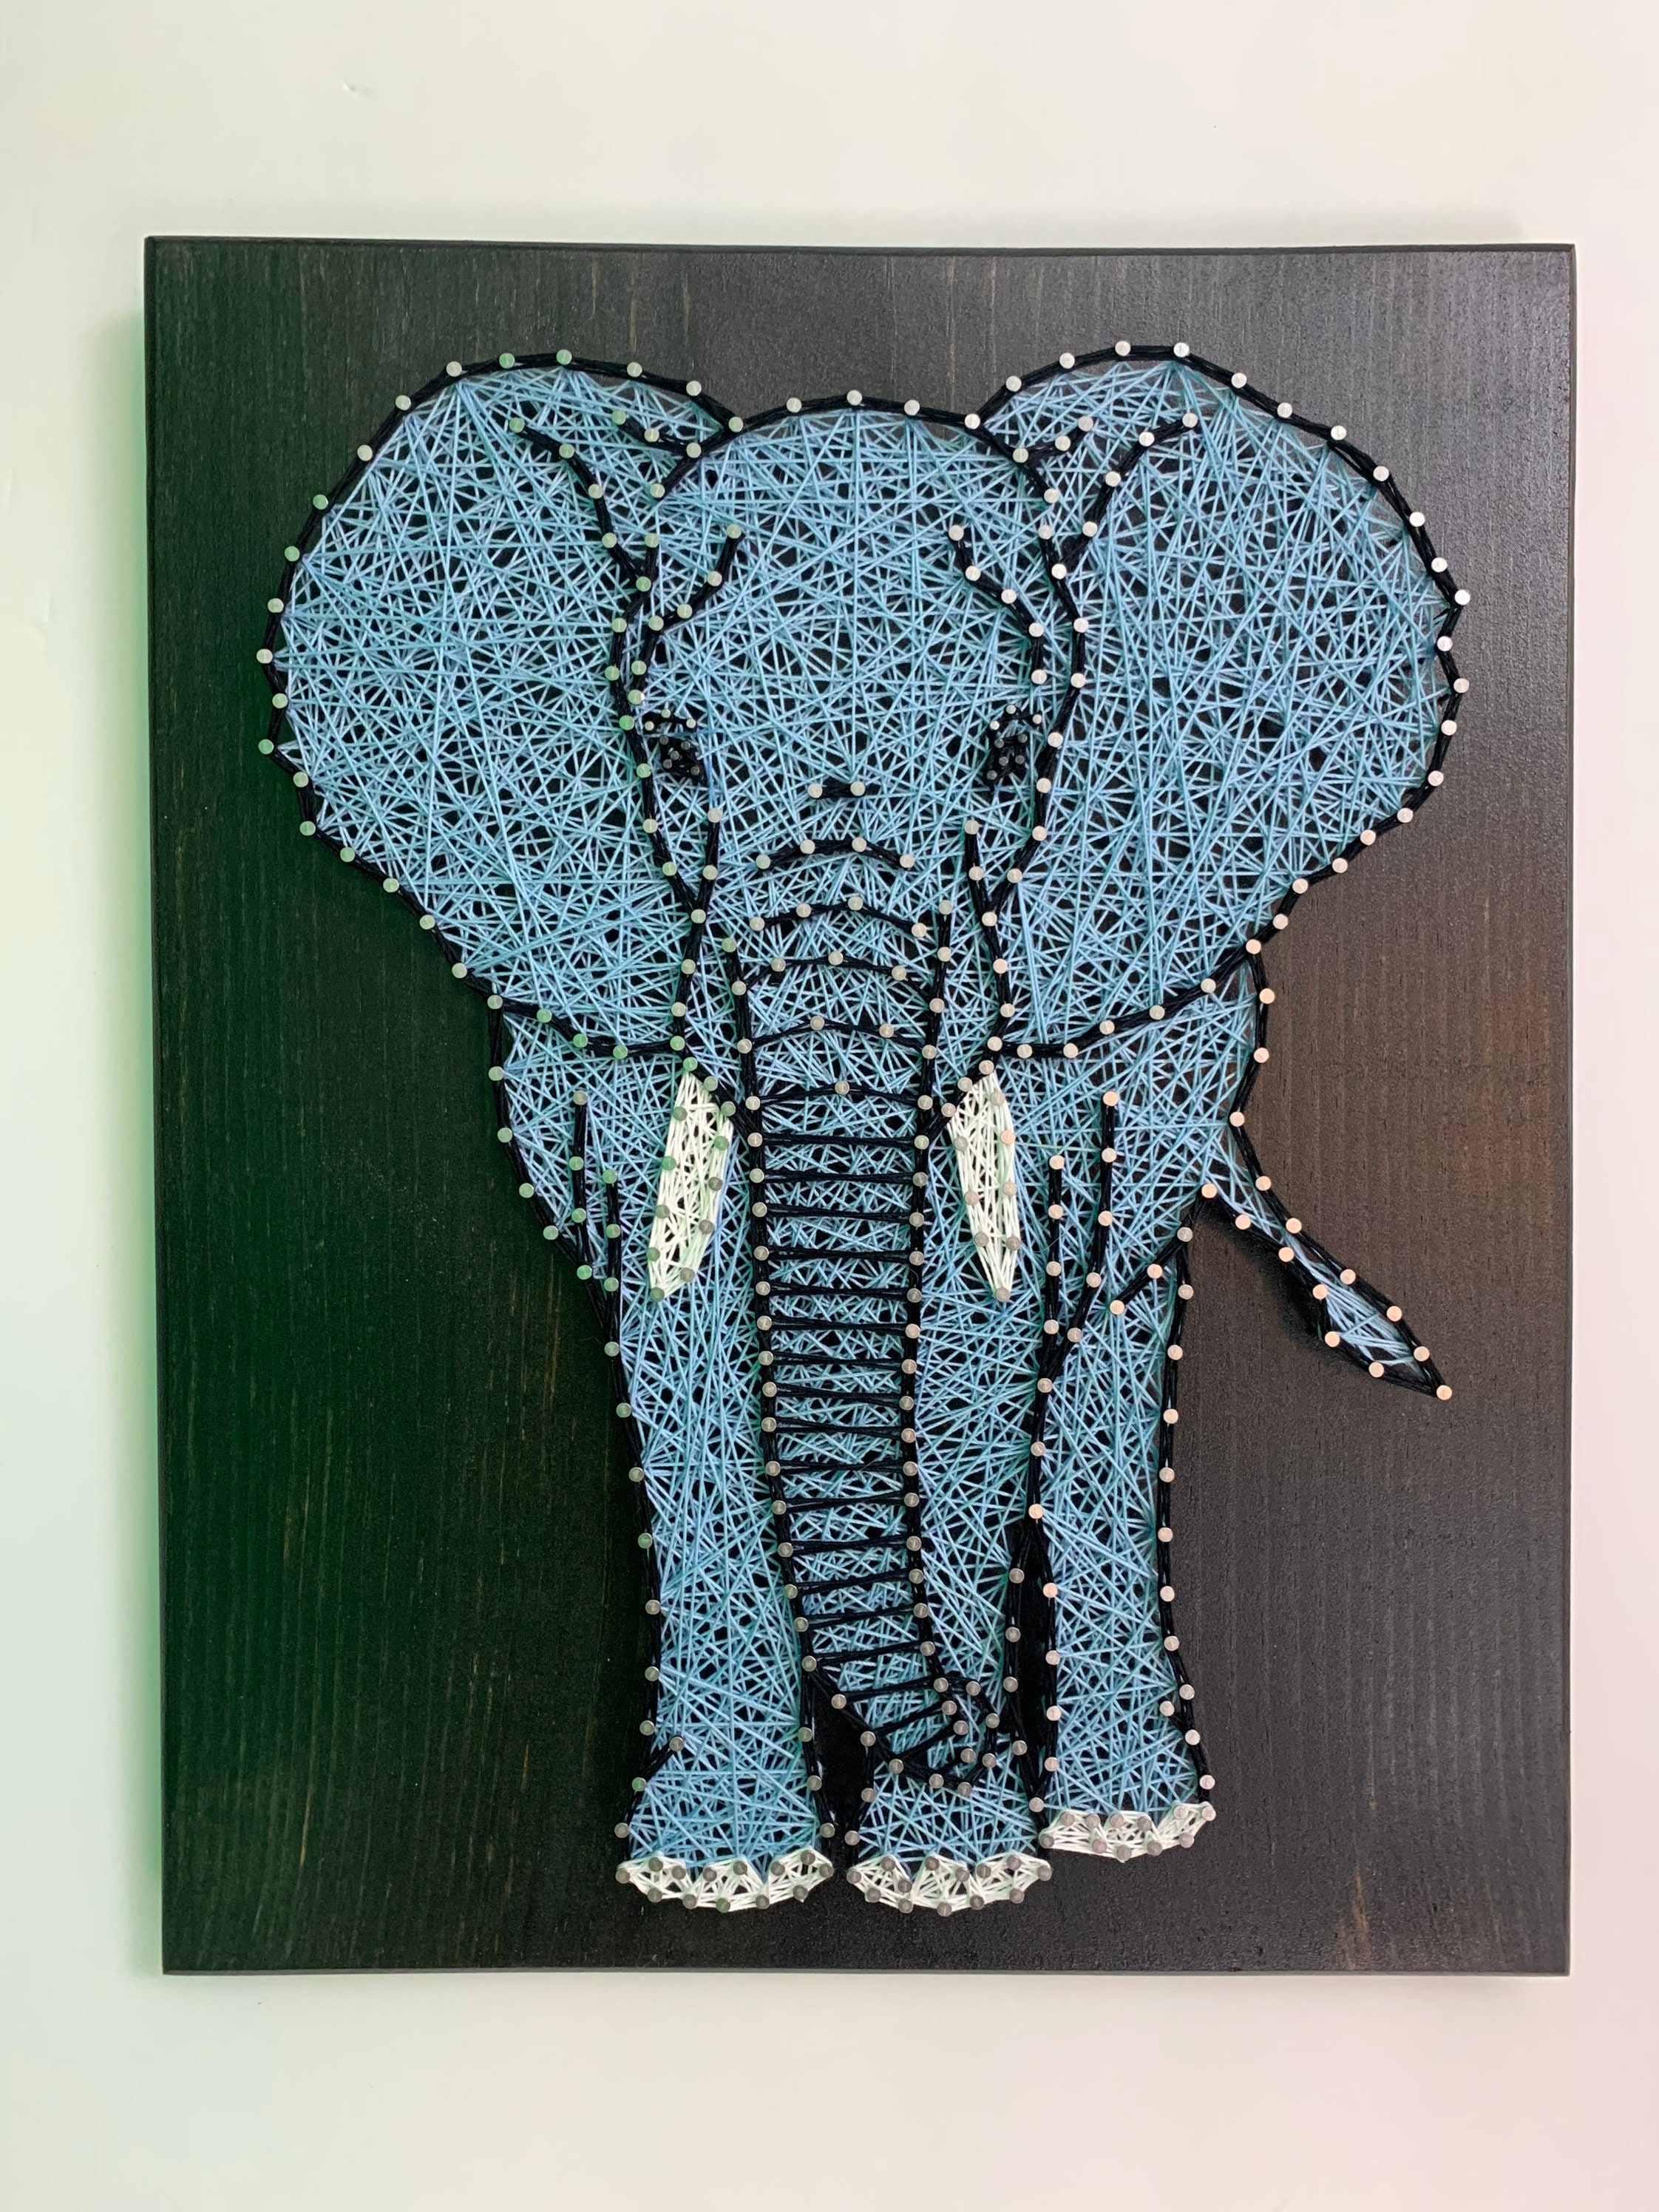 Elephant String Art 